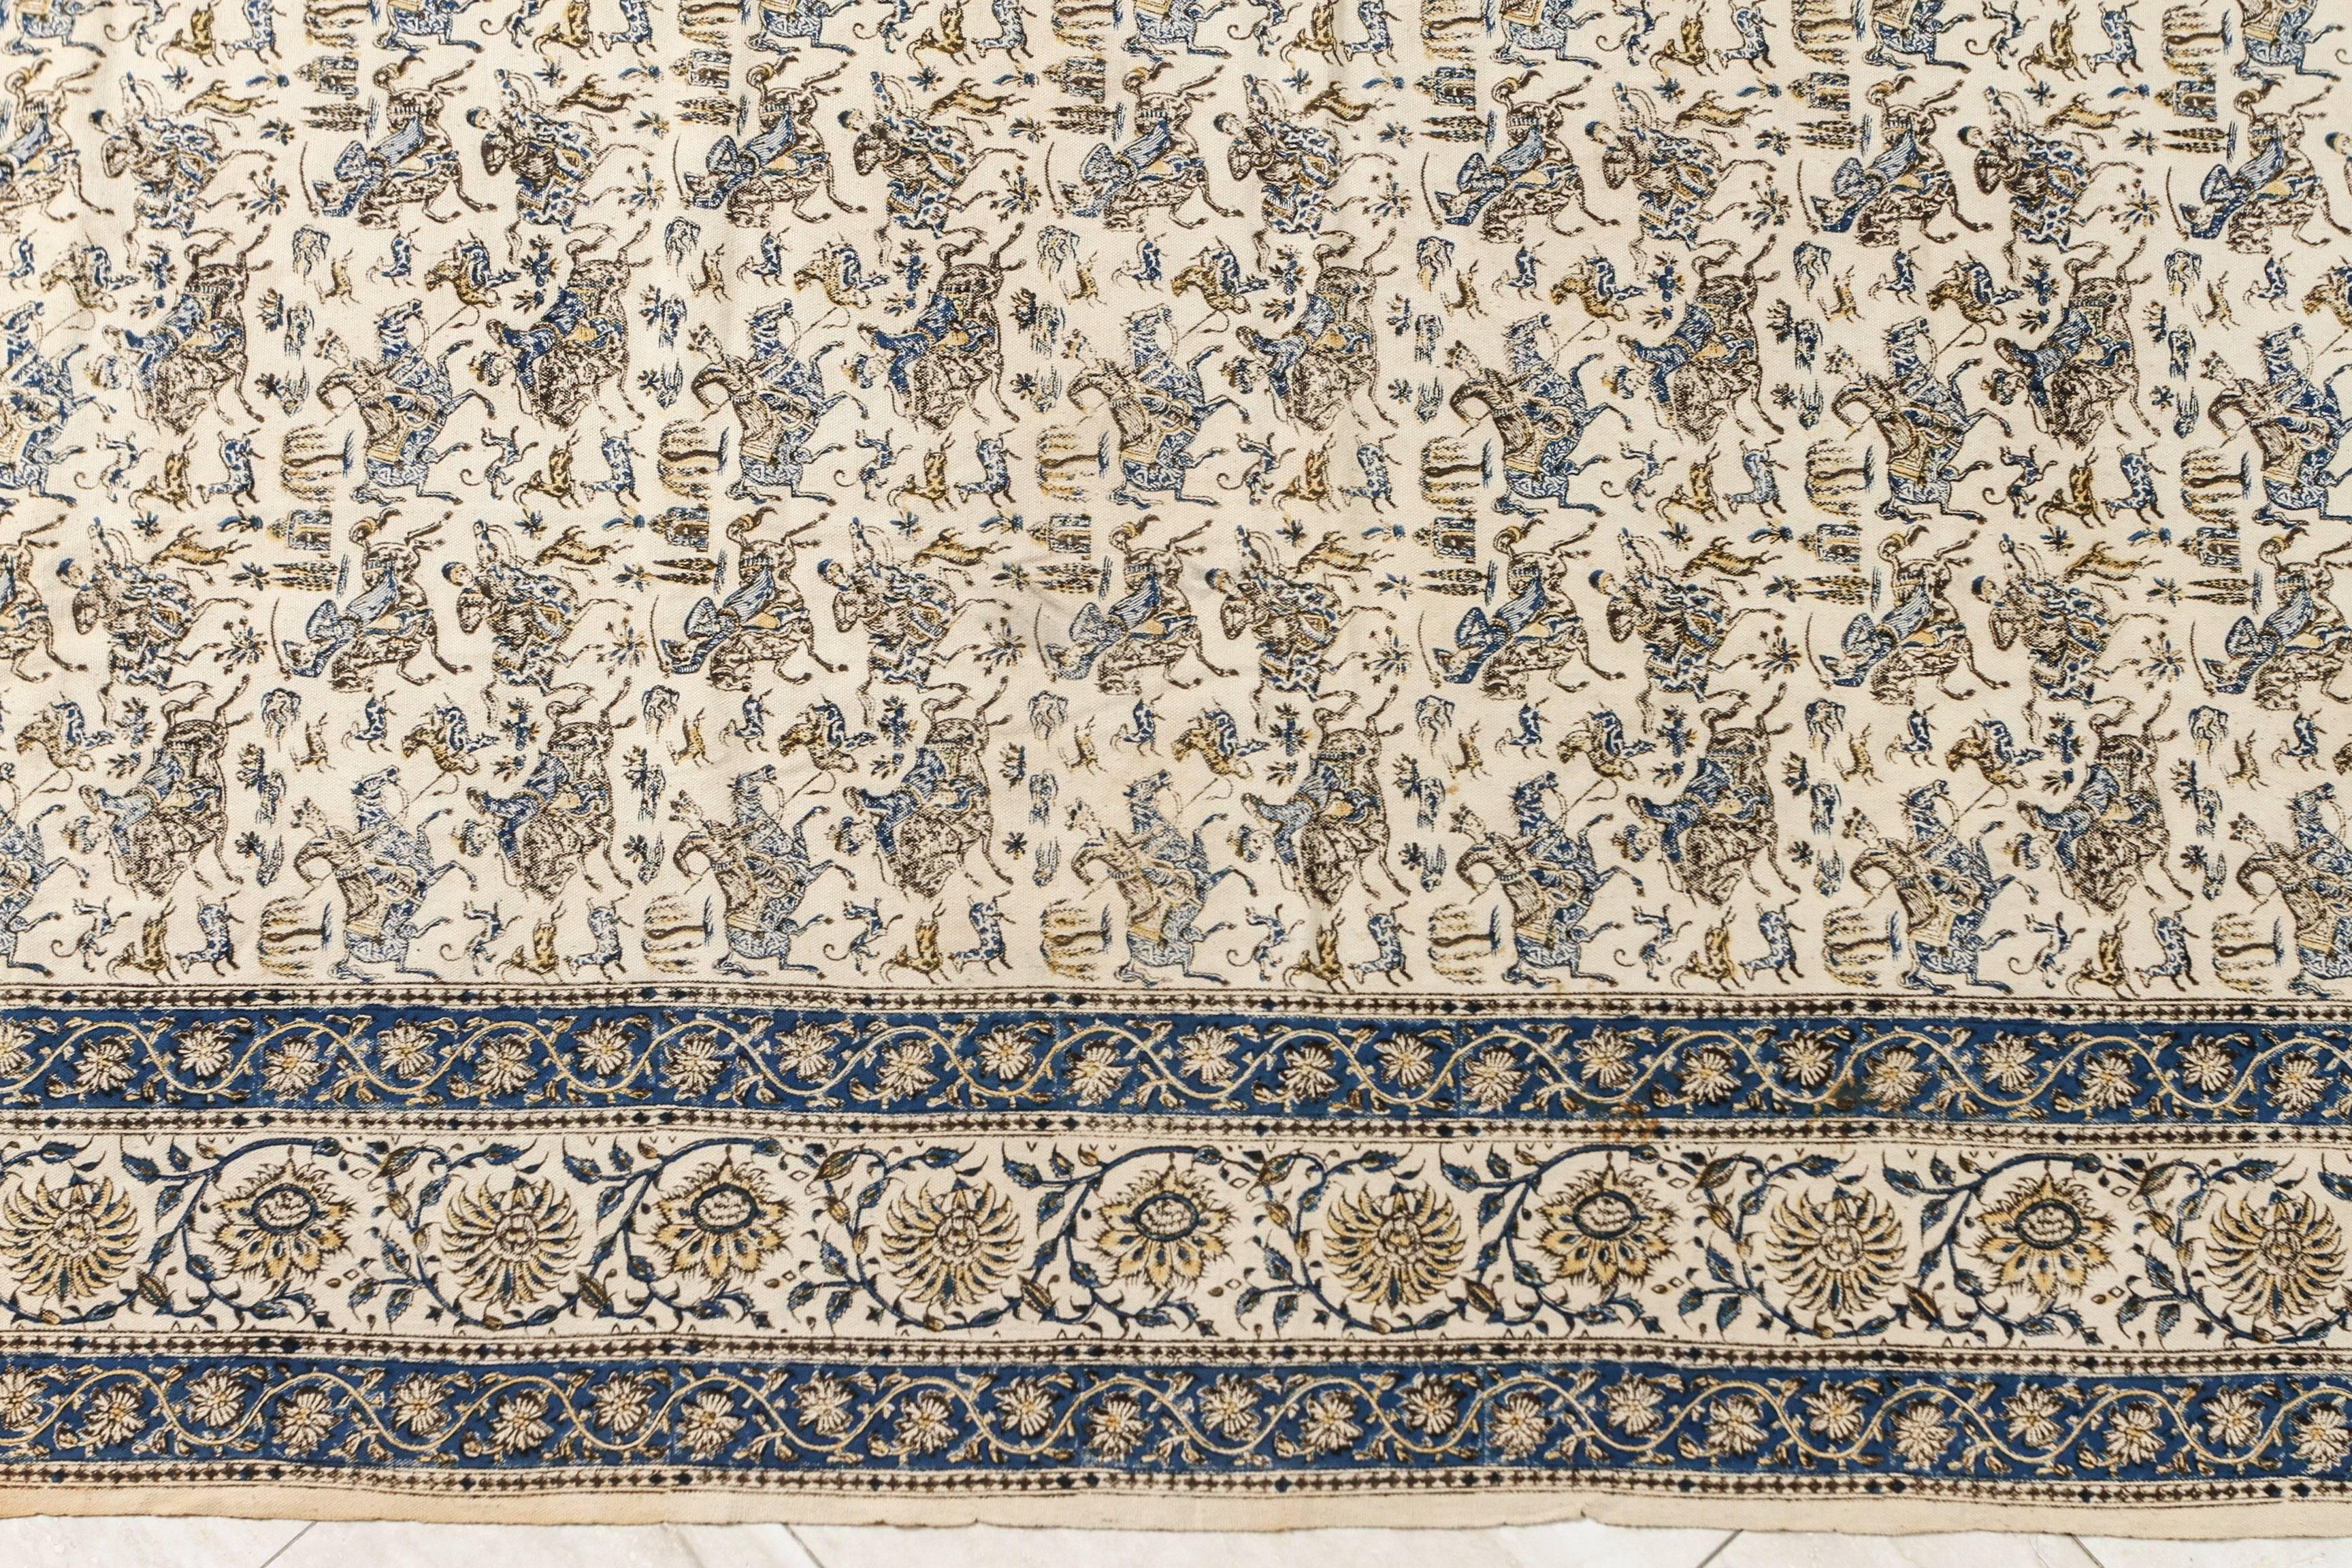 Hand-Painted Paisley Kalamkari Textile from India